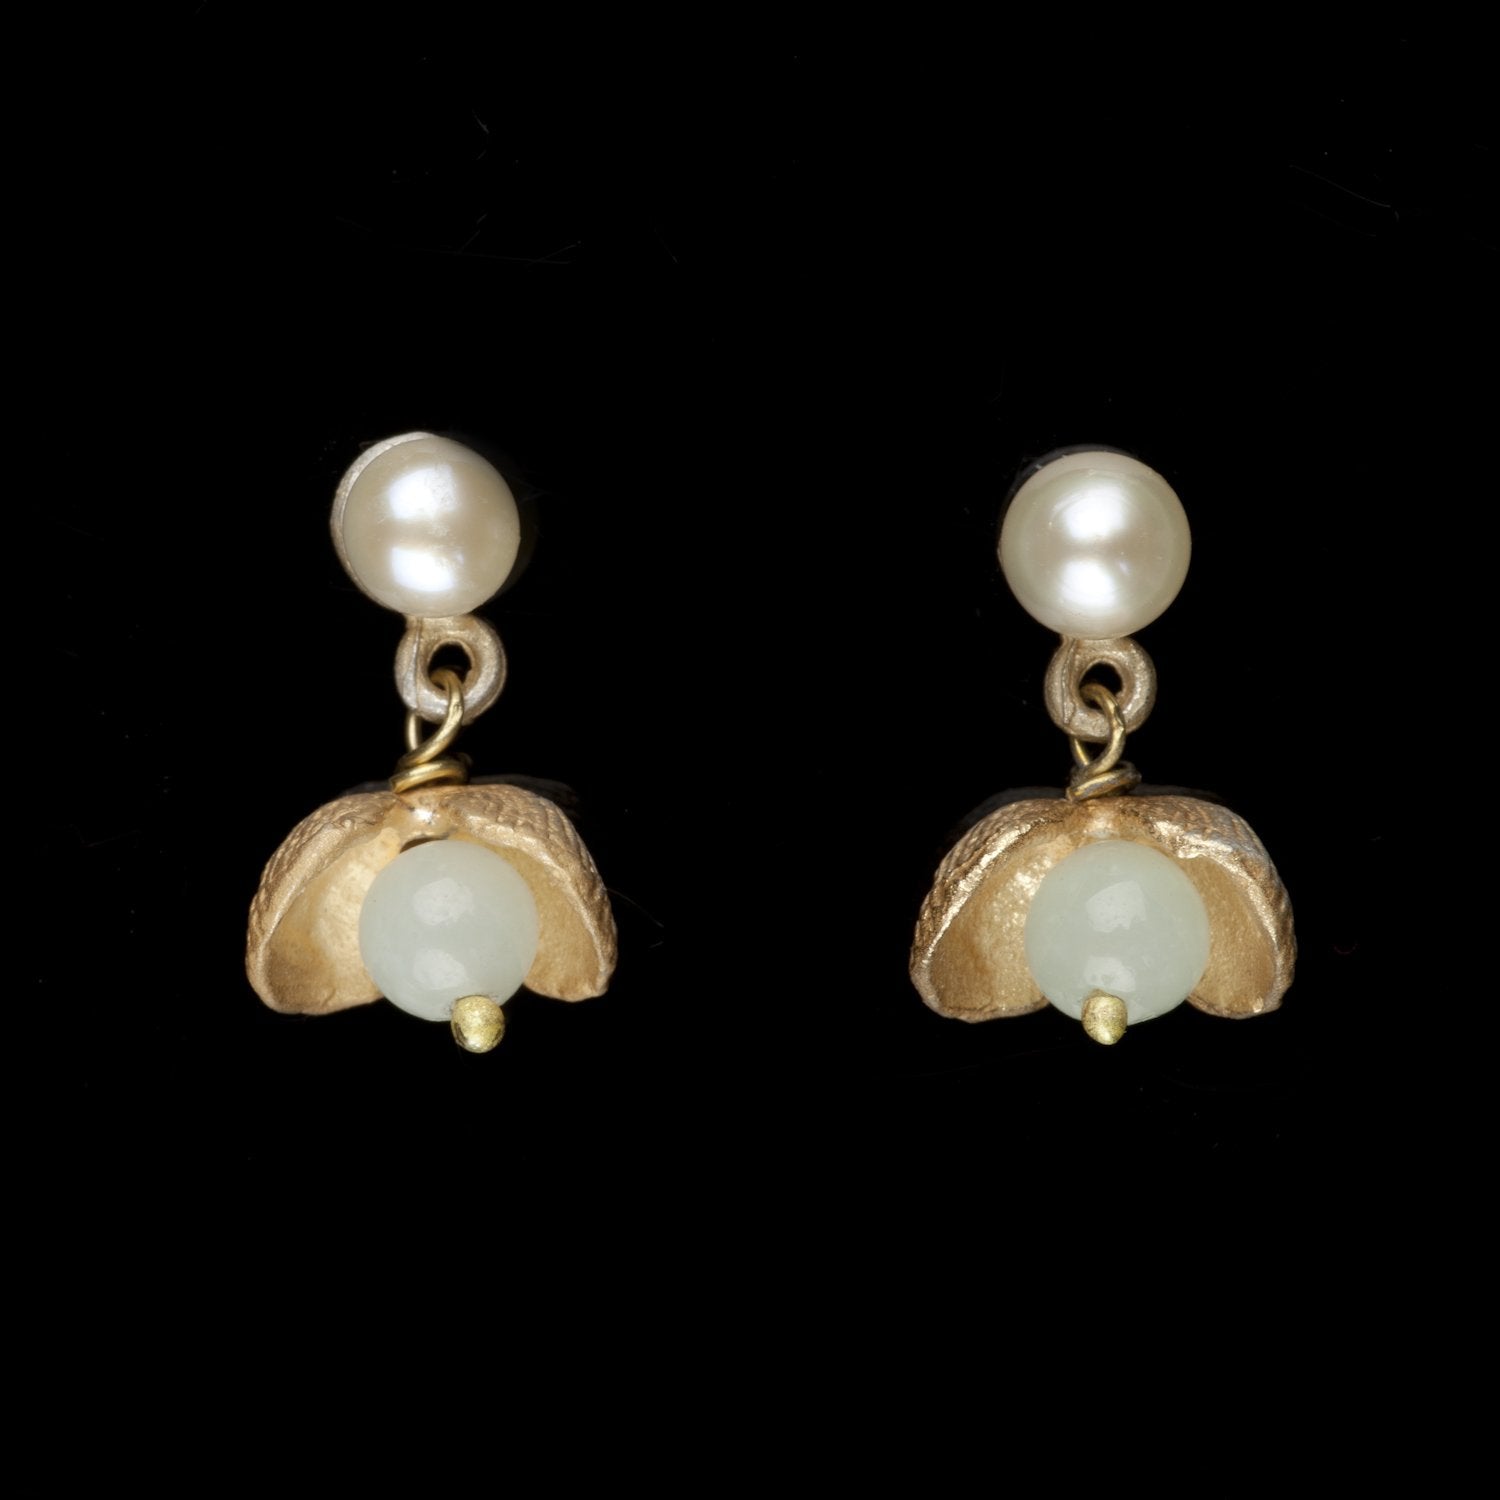 Itty Bitty Shell Earrings - The Nancy Smillie Shop - Art, Jewellery & Designer Gifts Glasgow